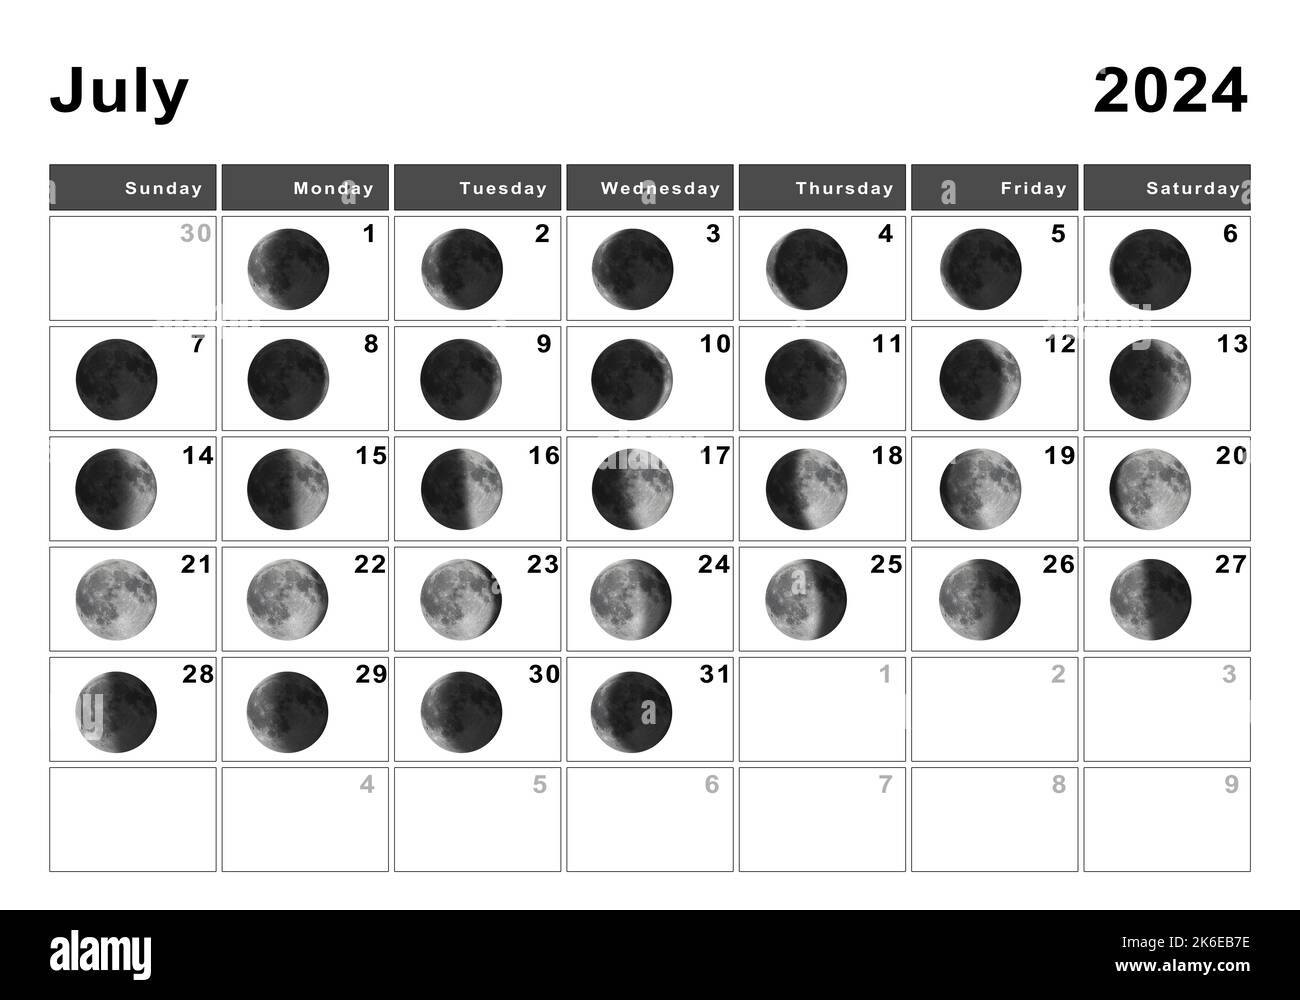 July 2024 Lunar Calendar, Moon Cycles, Moon Phases Stock Photo - Alamy in July 18 Lunar Calendar 2024